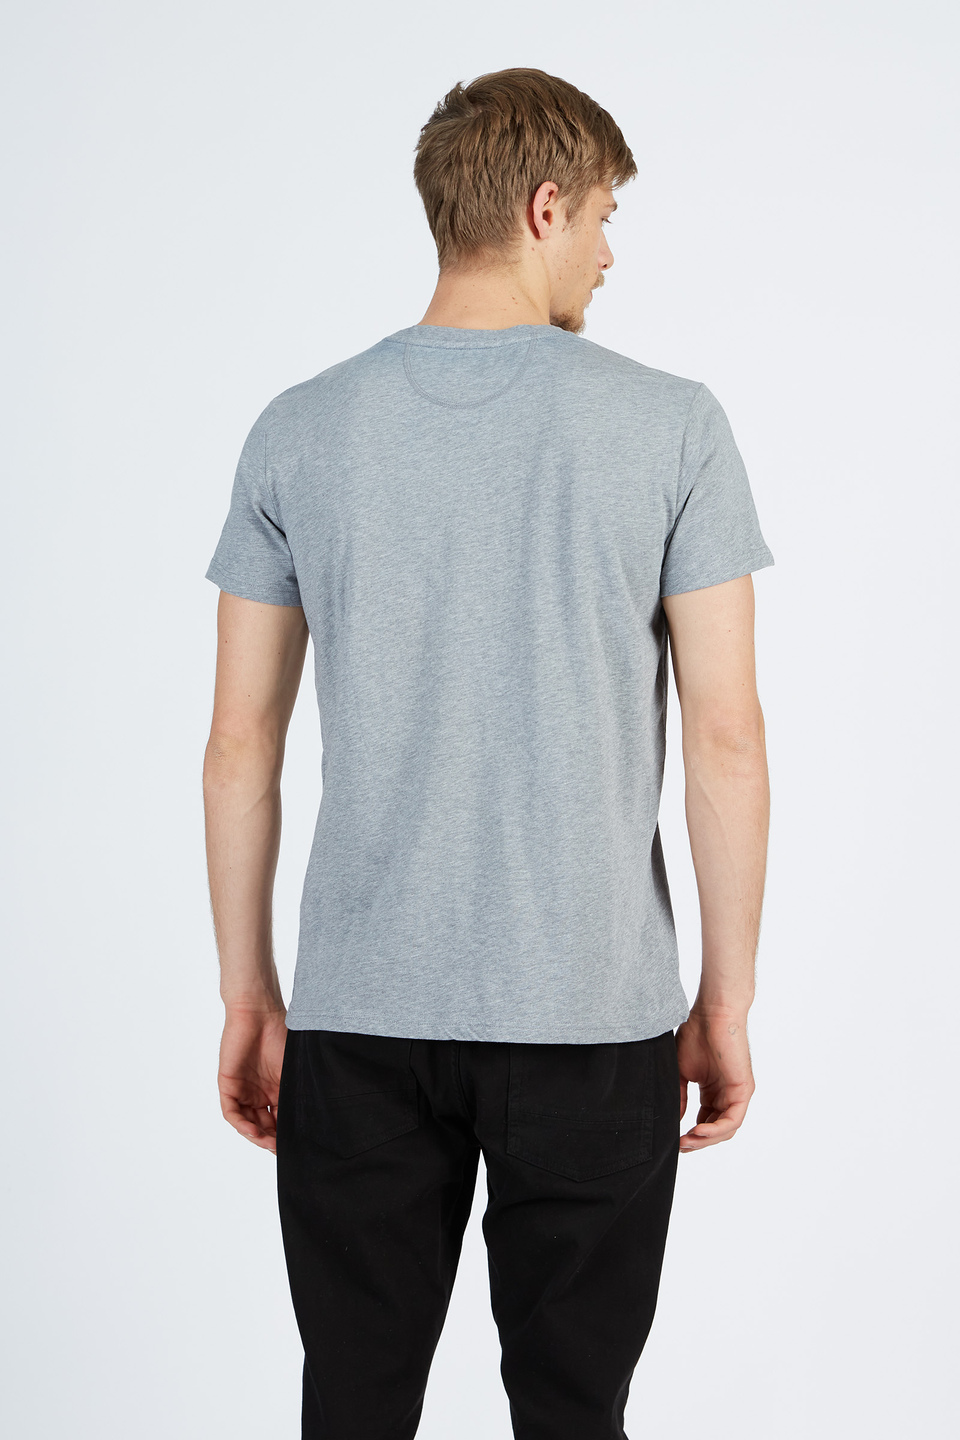 Men’s short-sleeved regular fit crew neck t-shirt | La Martina - Official Online Shop